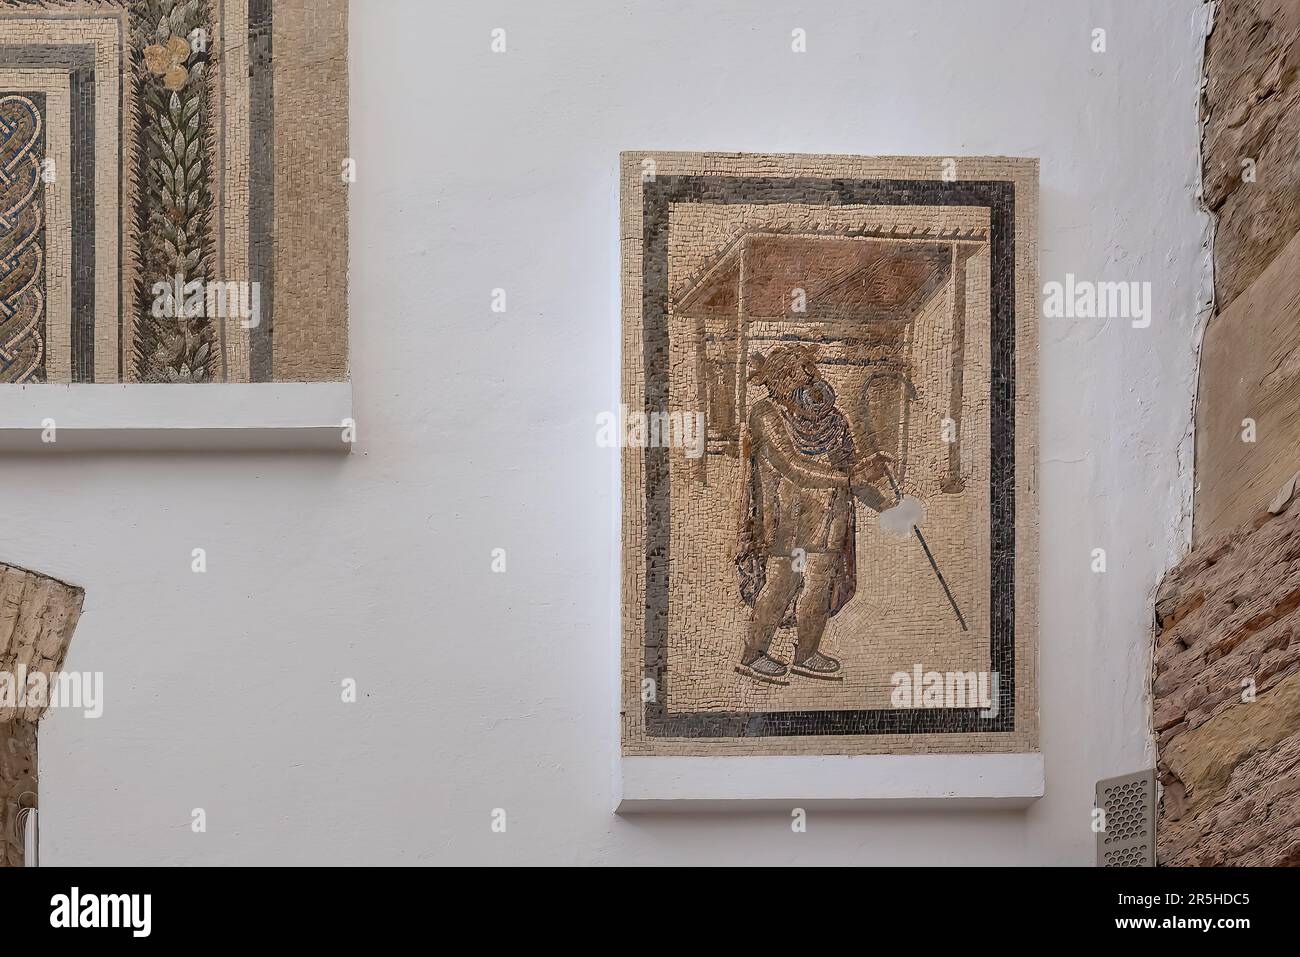 Tragic Actor Mosaic at Hall of Mosaics in Alcazar de los Reyes Cristianos - Cordoba, Andalusia, Spain Stock Photo